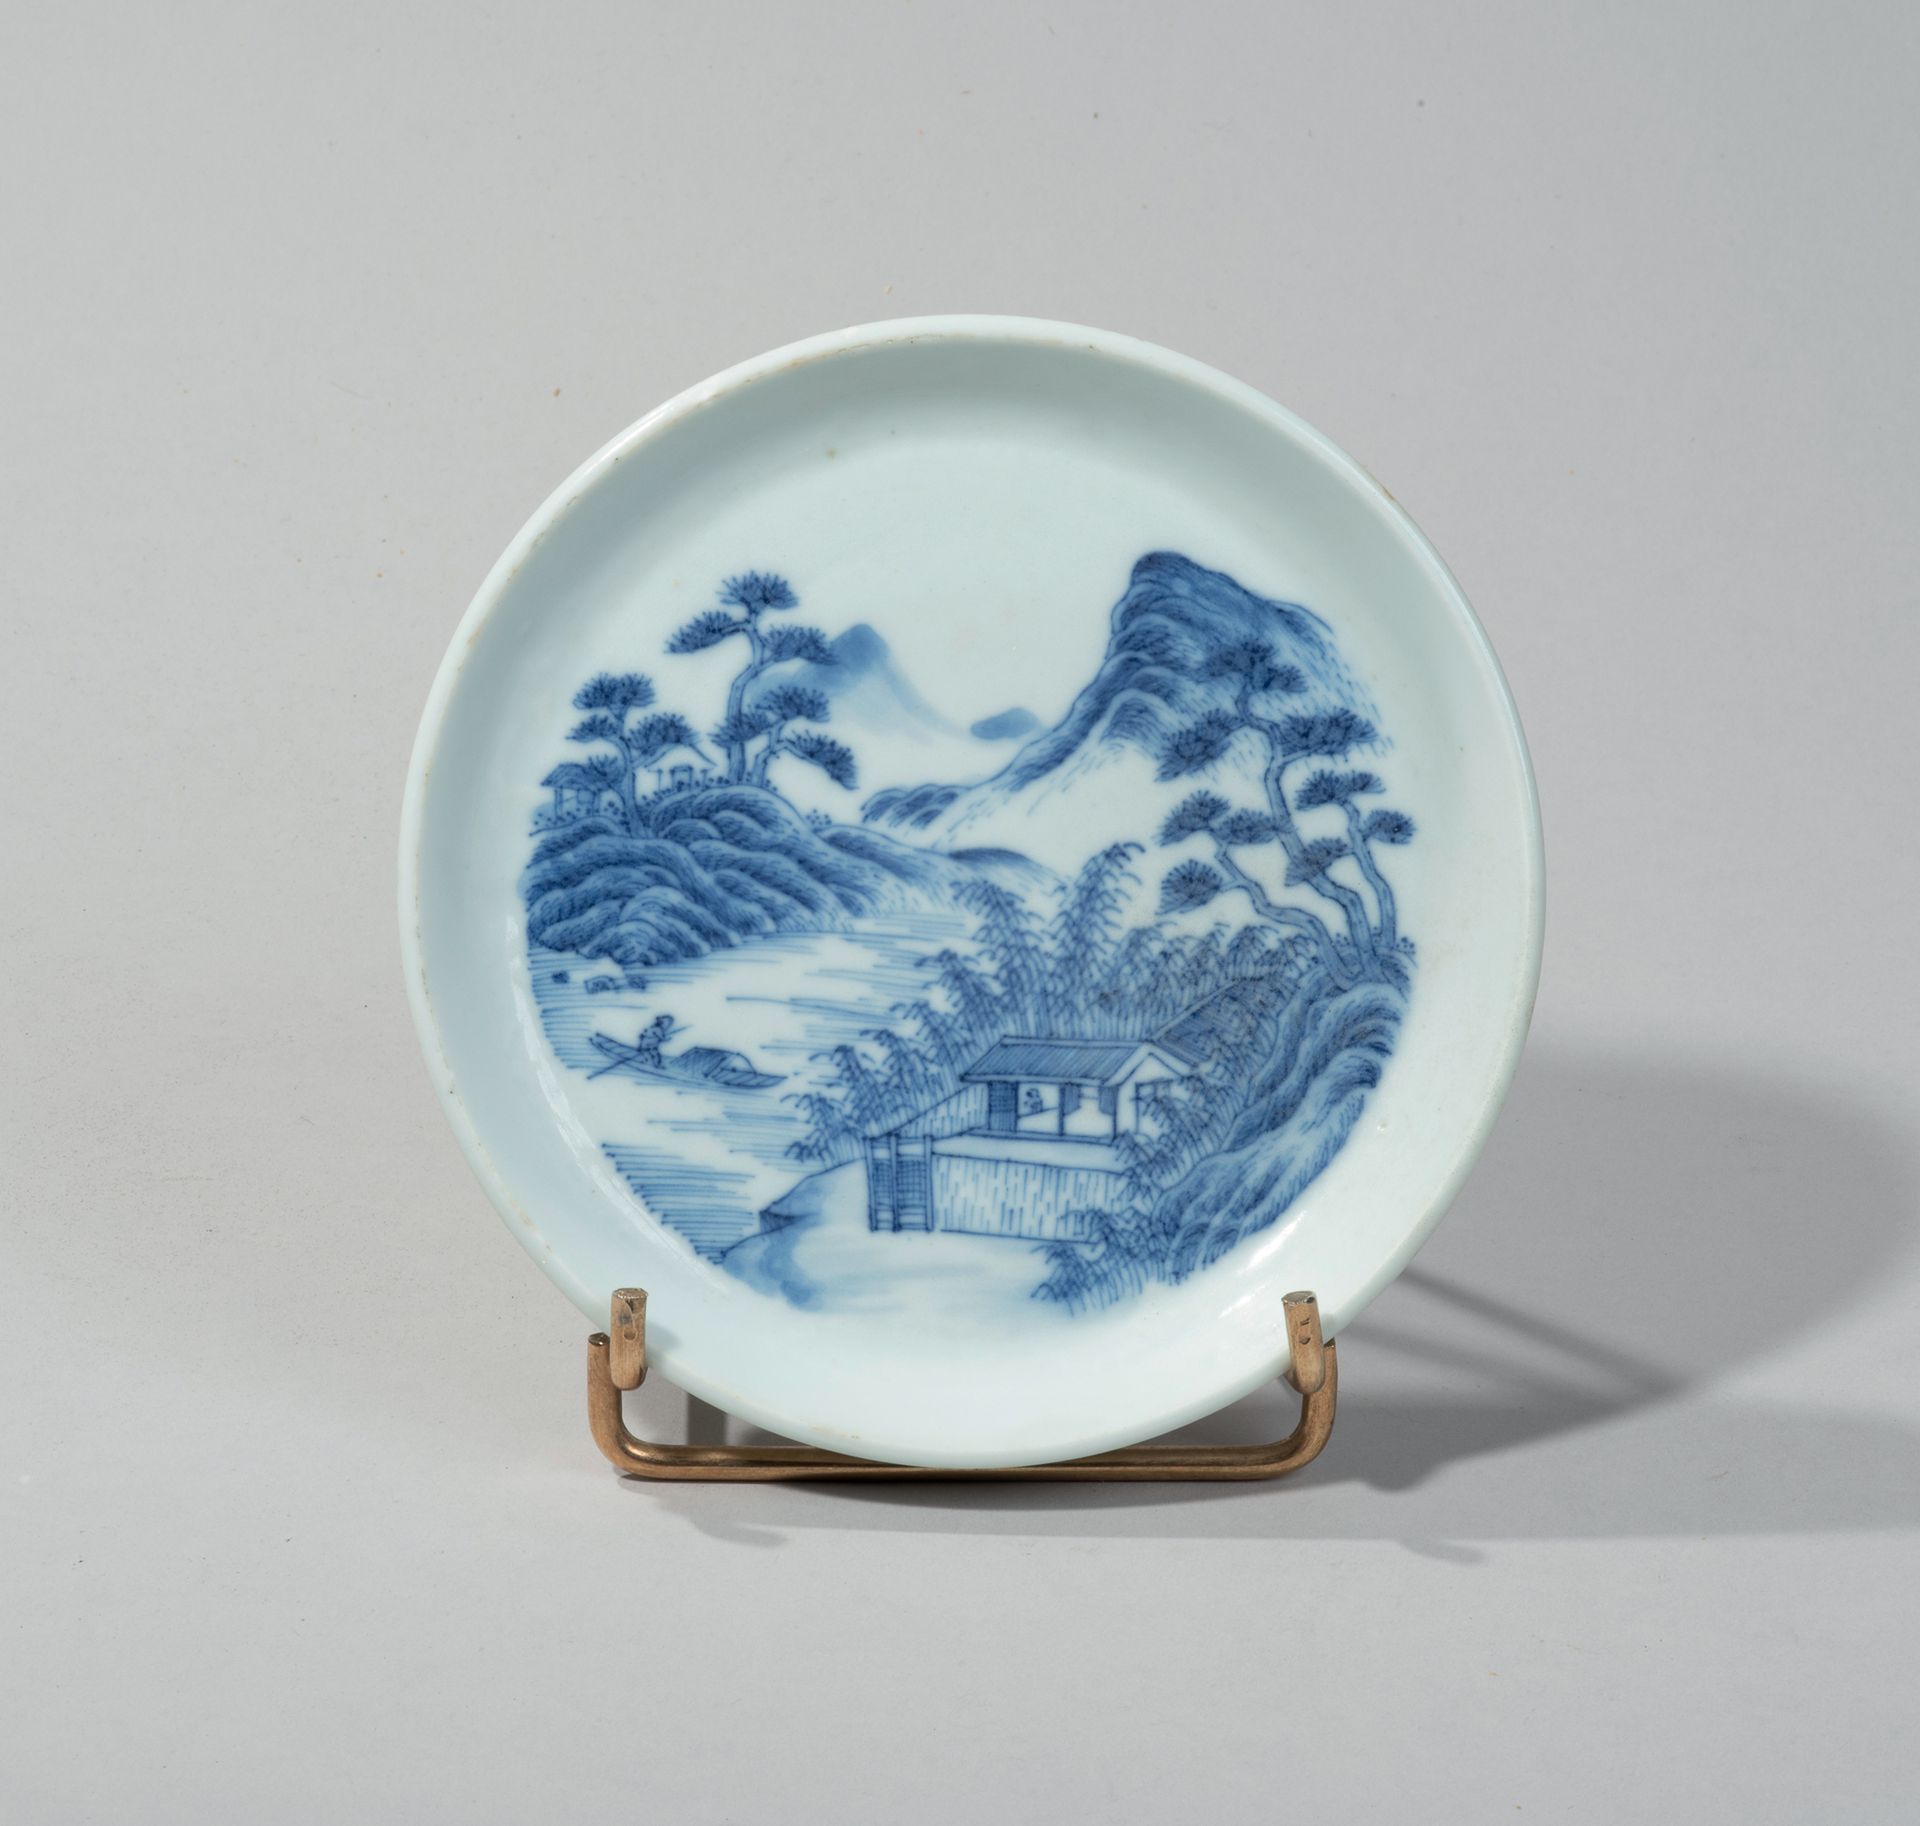 VIETNAM, Hue - XVIIIe siècle 
Porcelain cup with blue underglaze decoration of a&hellip;